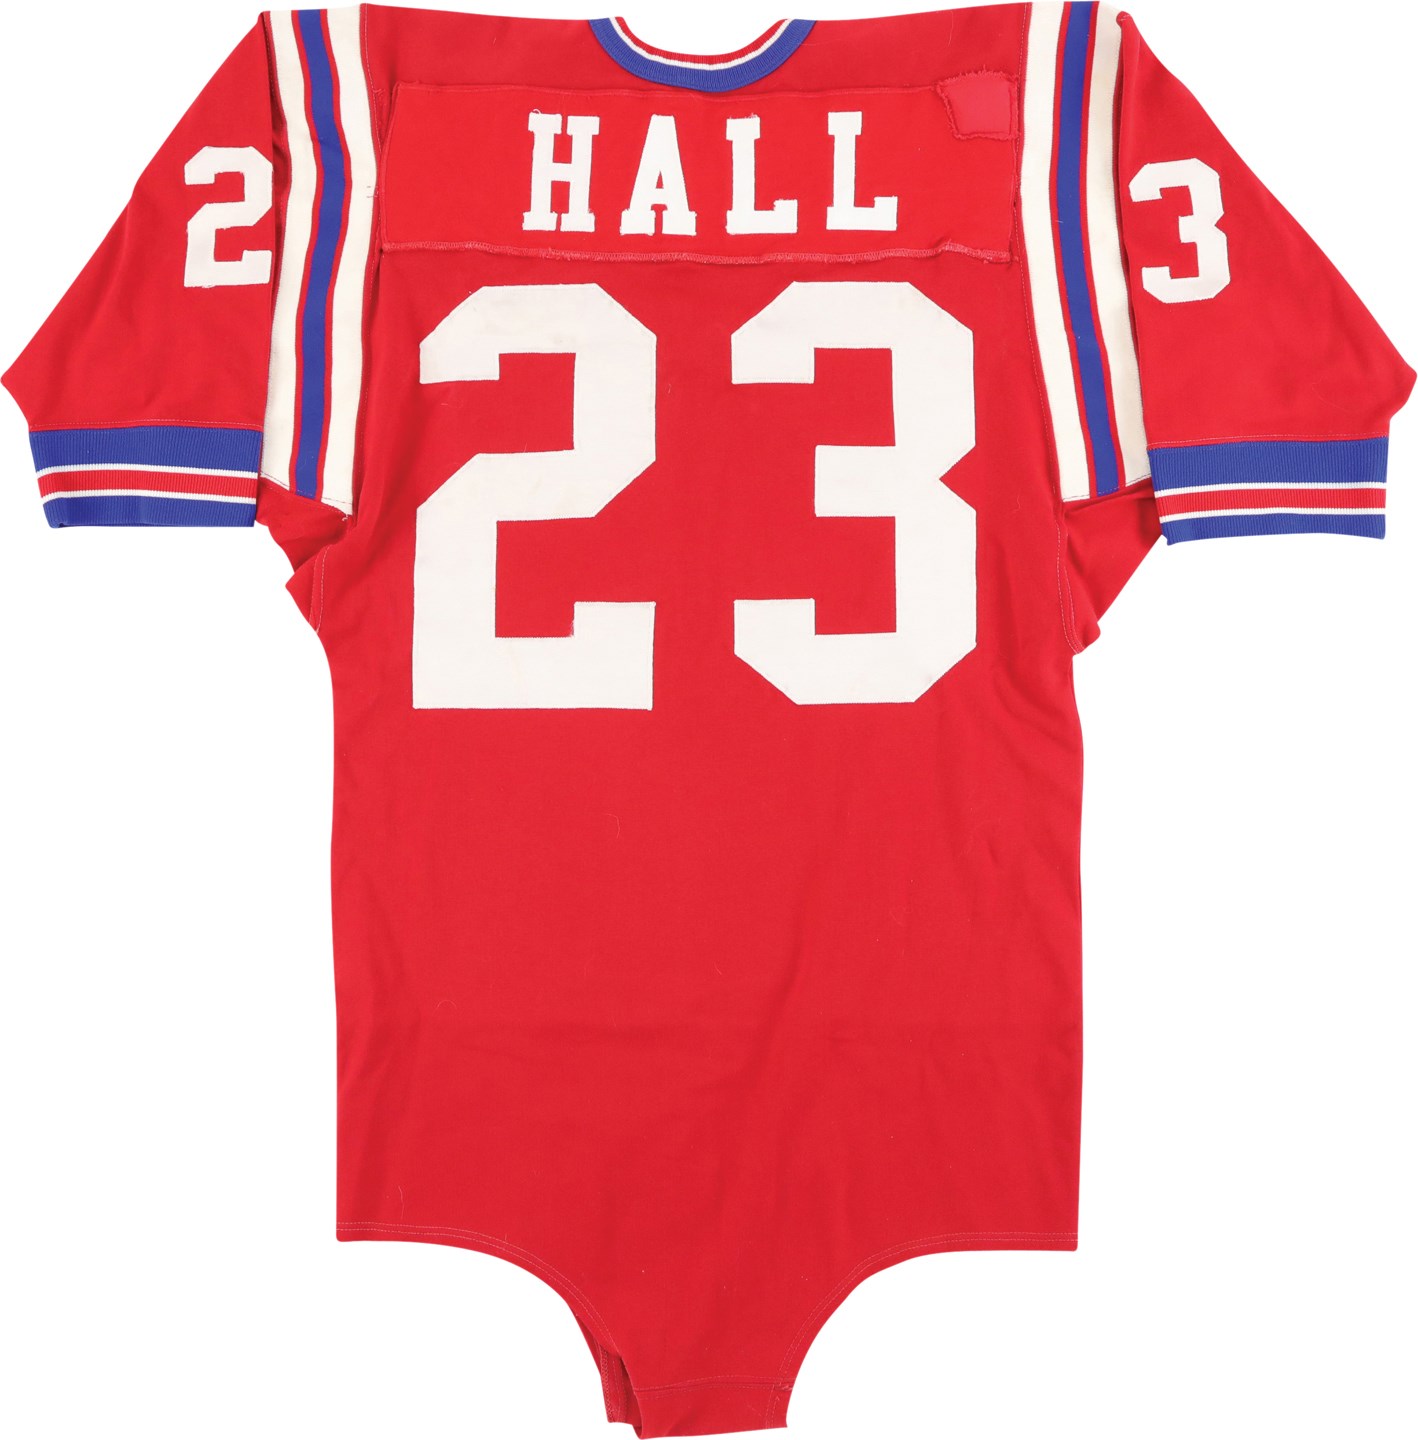 Rare 1967 Ron Hall Boston Patriots Game Worn Jersey (Hall LOA)